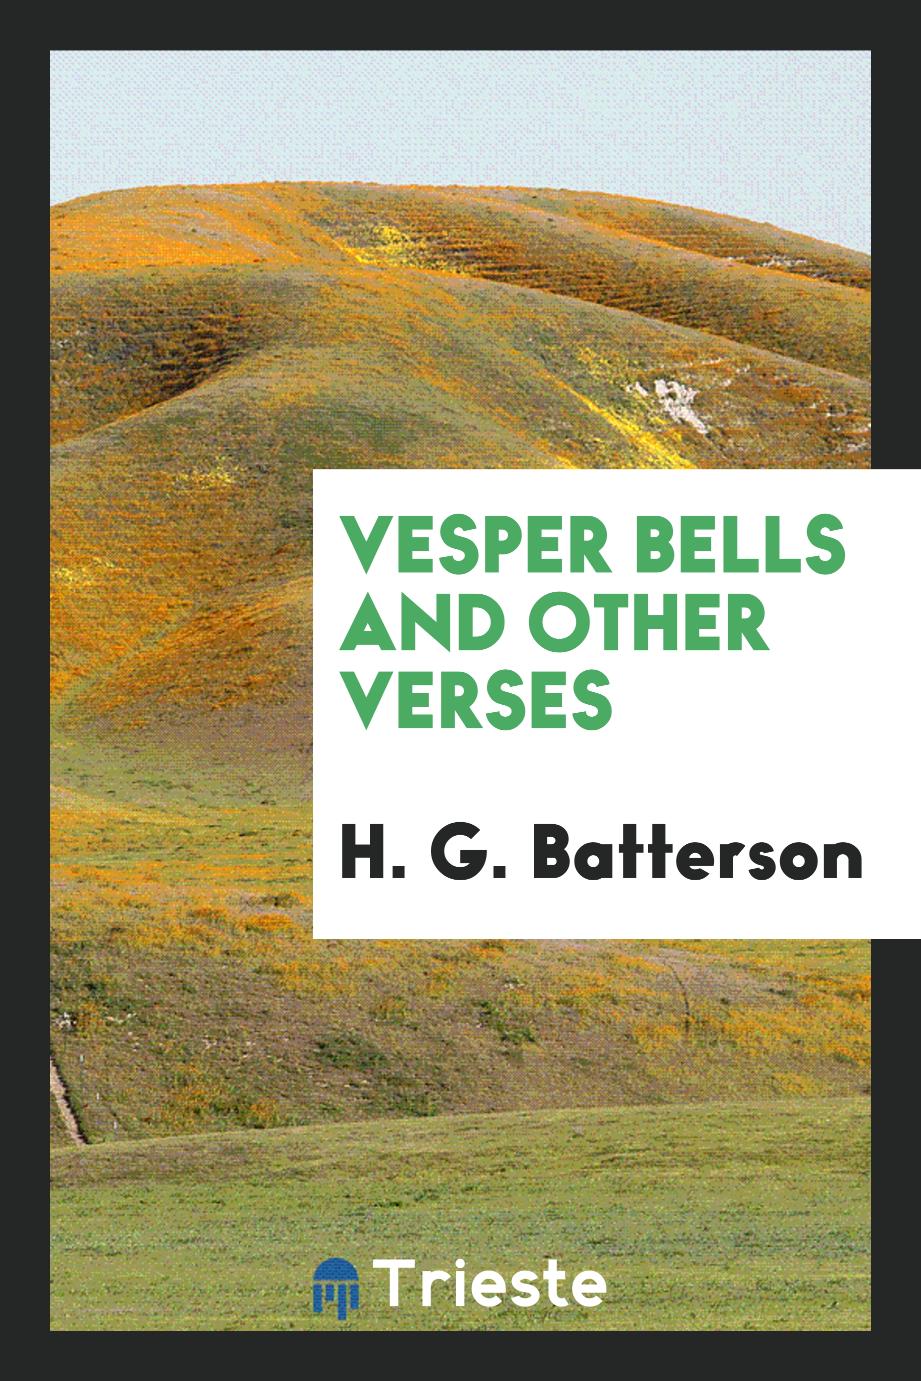 Vesper Bells and Other Verses